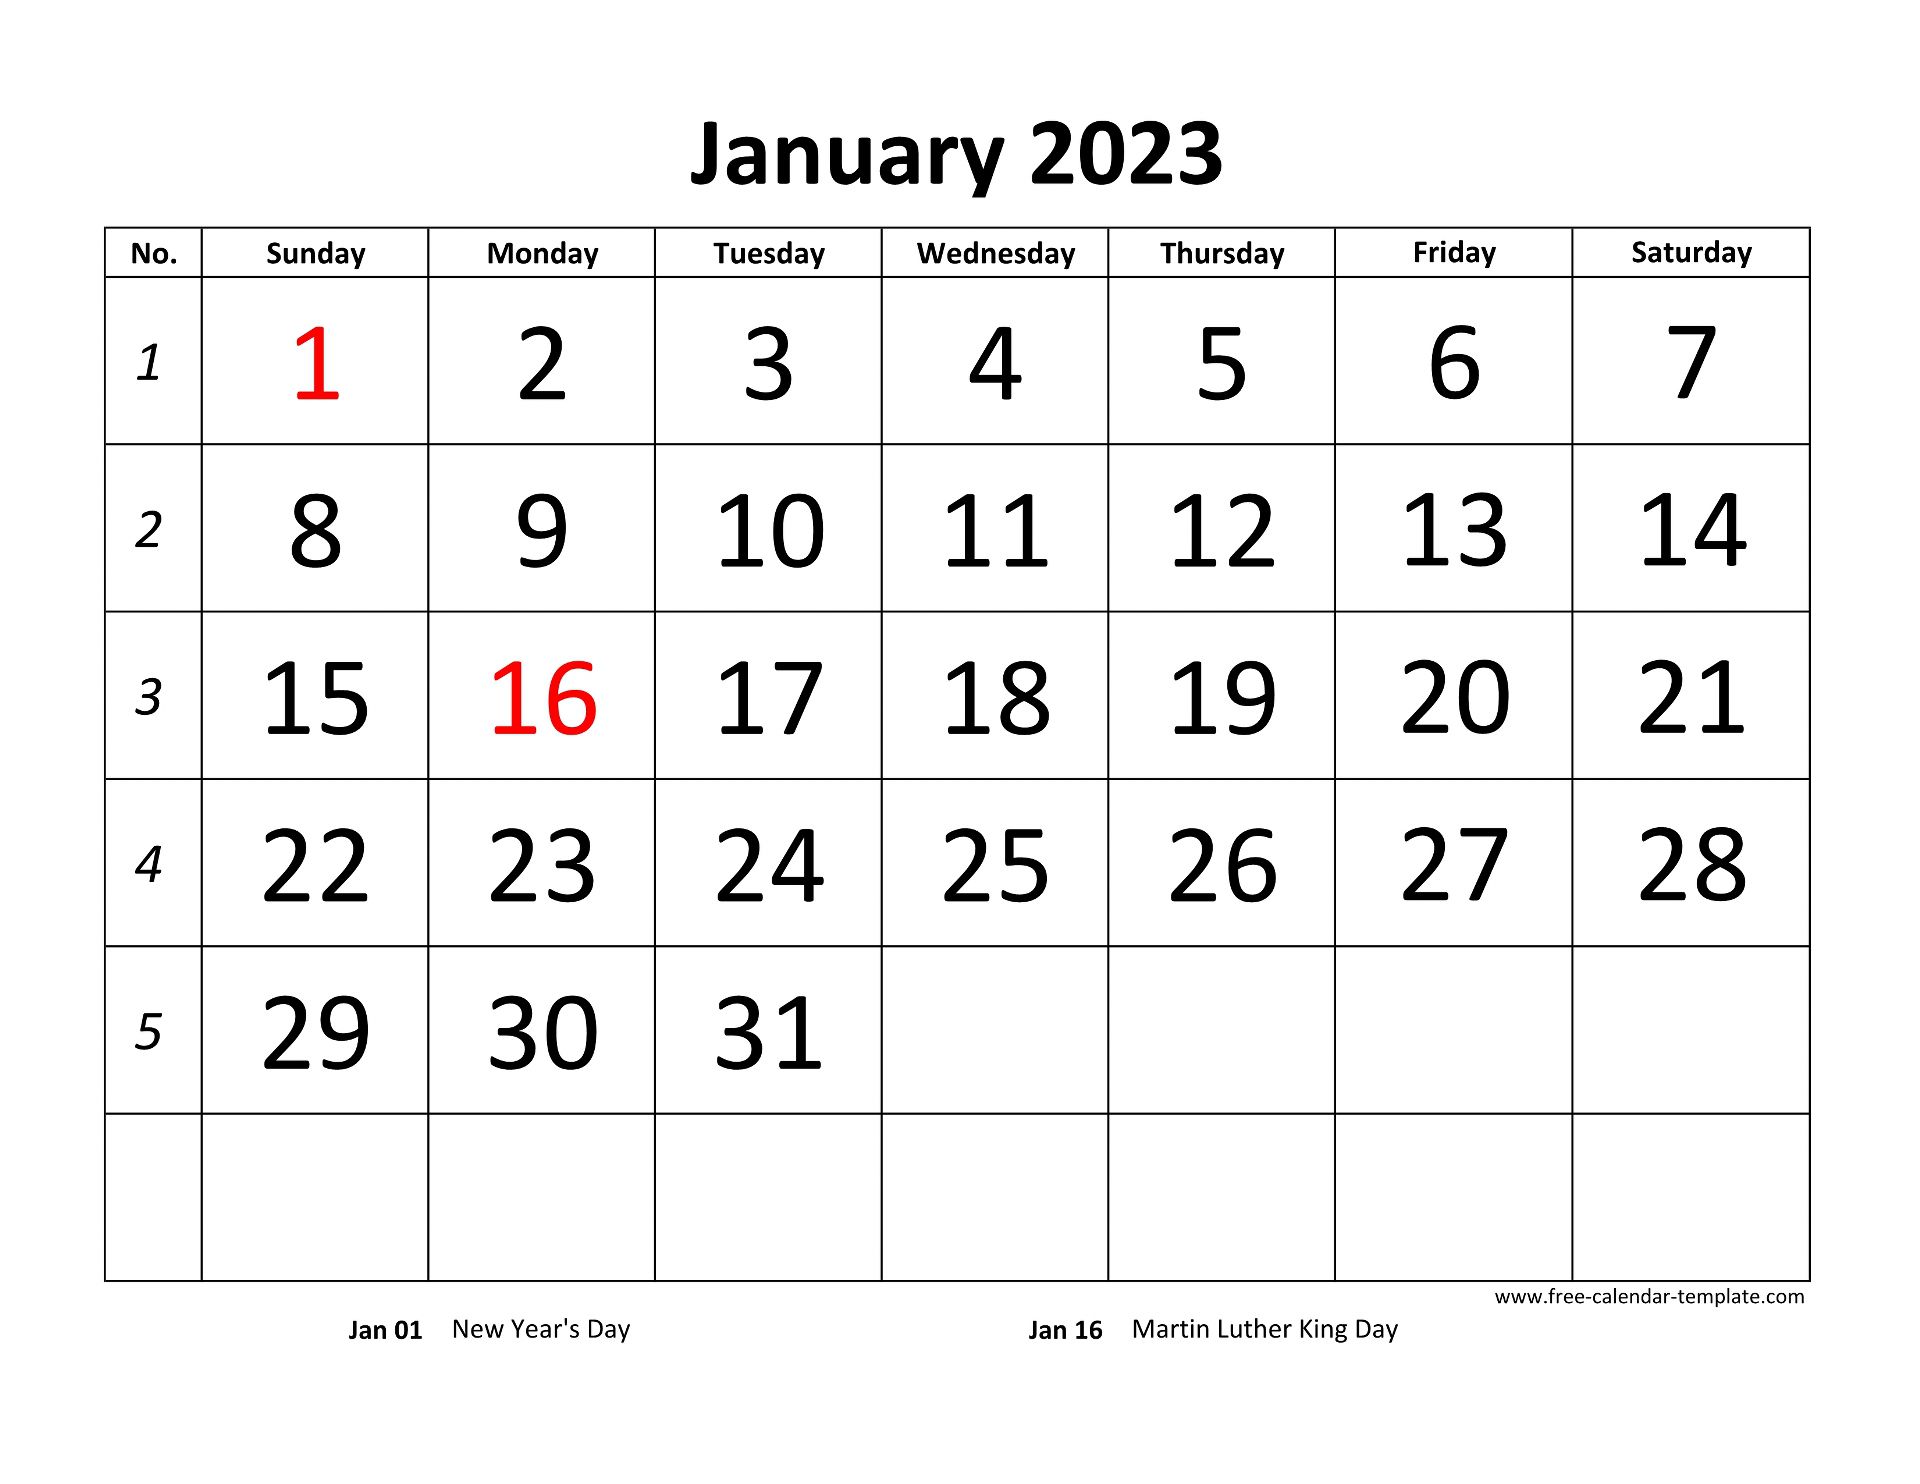 January 2023 Free Calendar Tempplate